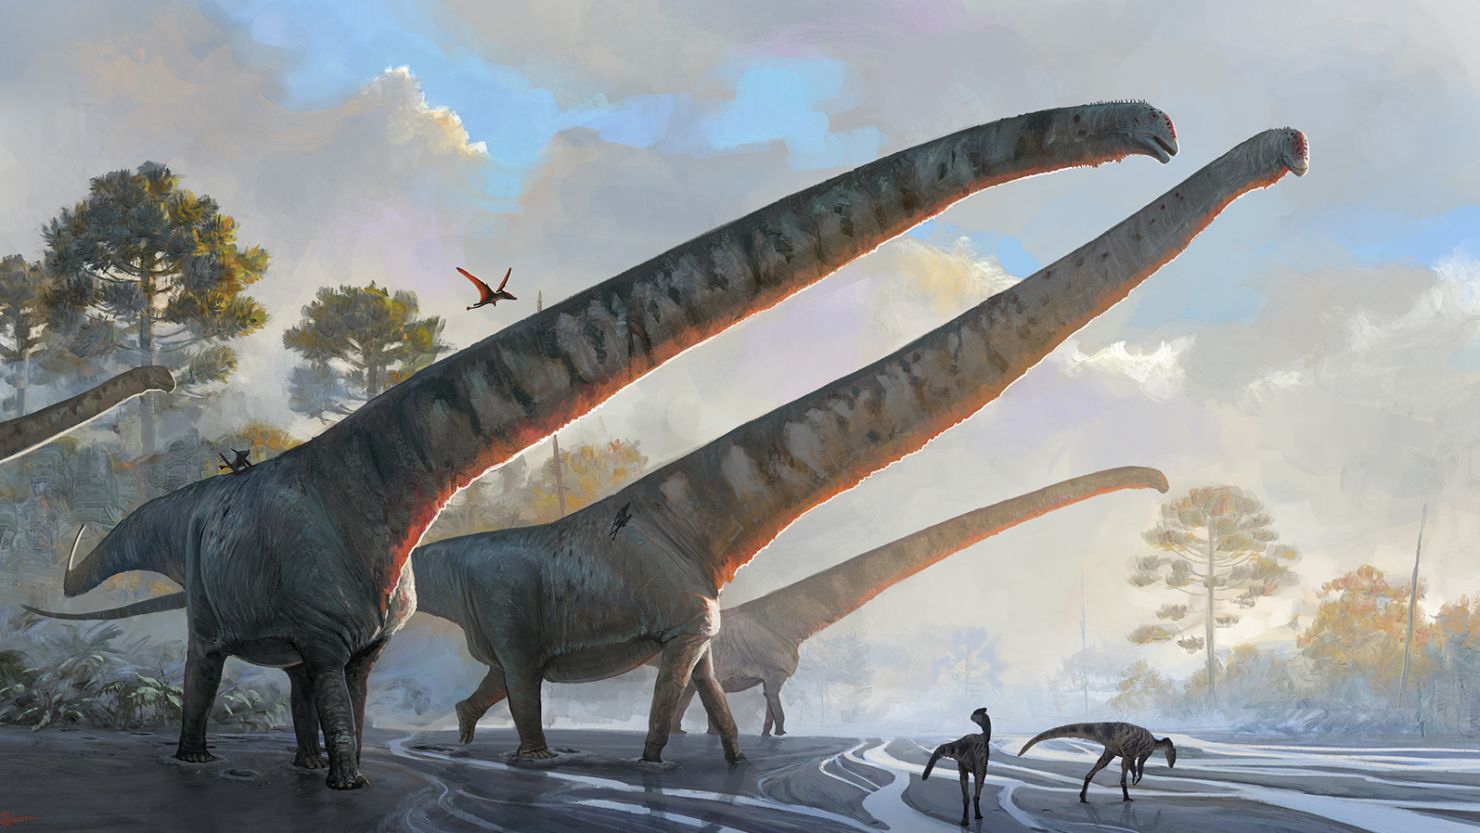 Mamenchisaurus sinocanadorum had the longest neck of any known dinosaur, researchers said. 